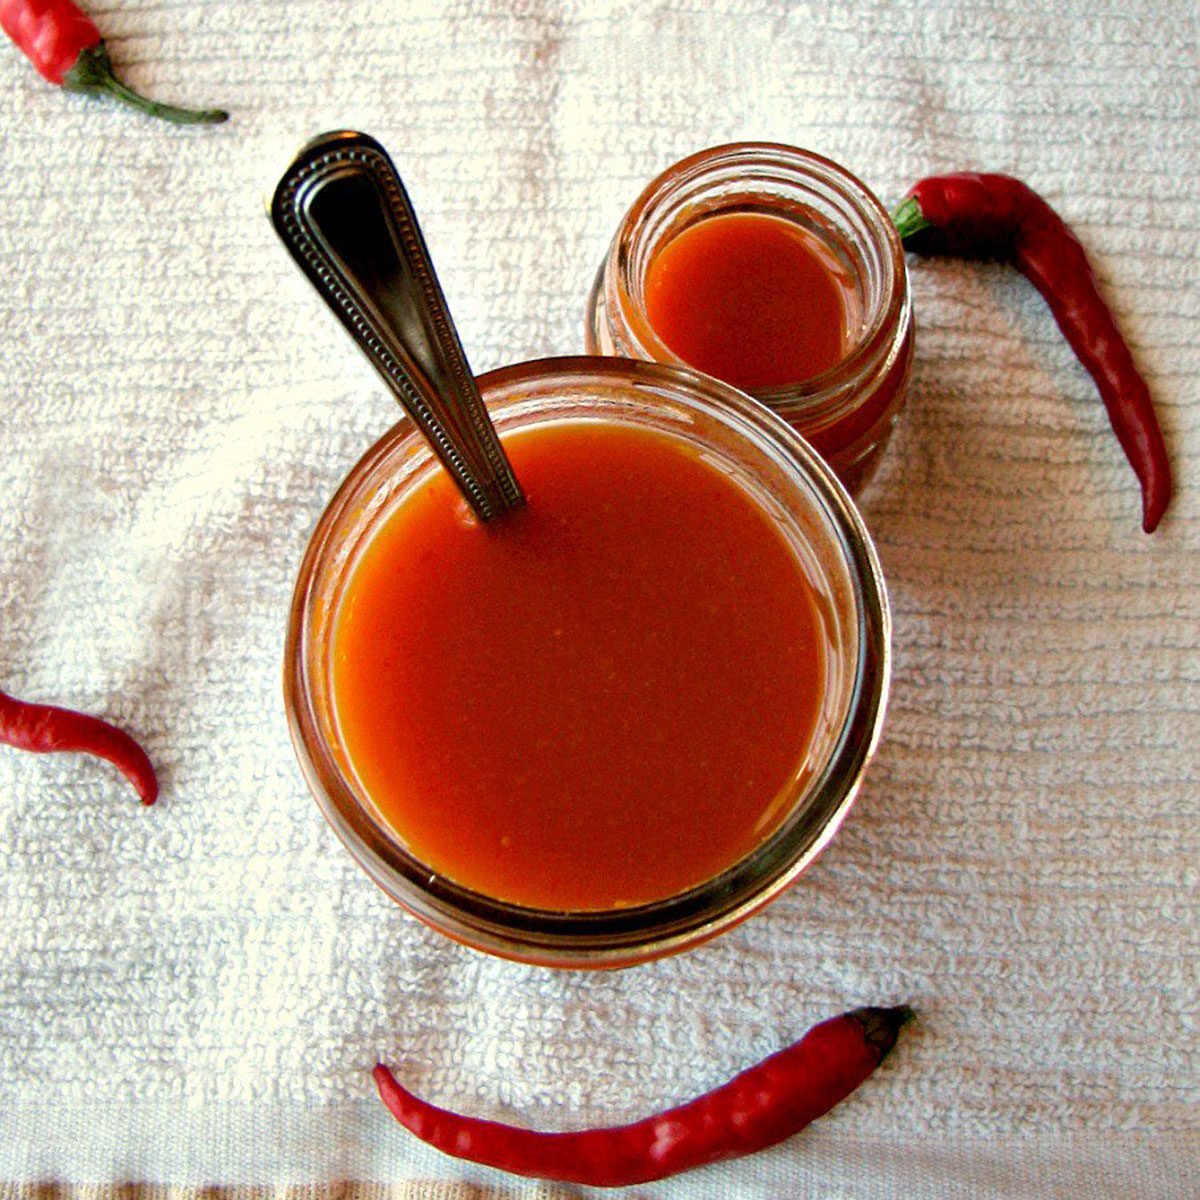 https://www.tasteofhome.com/wp-content/uploads/2019/09/Homemade-Cayenne-Pepper-Sauce-Overhead.jpg